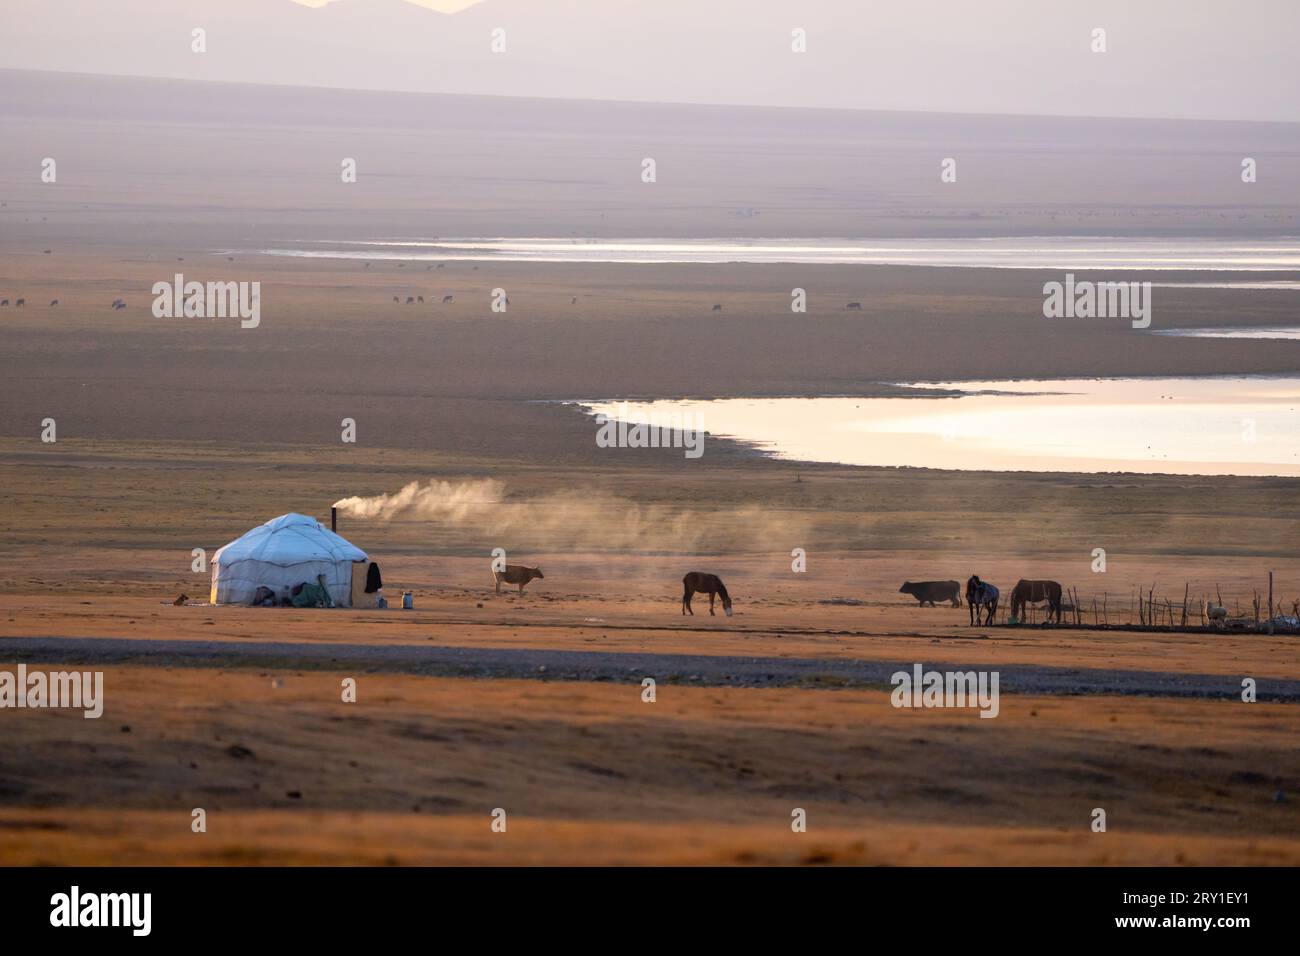 Yurt camp in Kyrgyzstan Stock Photo